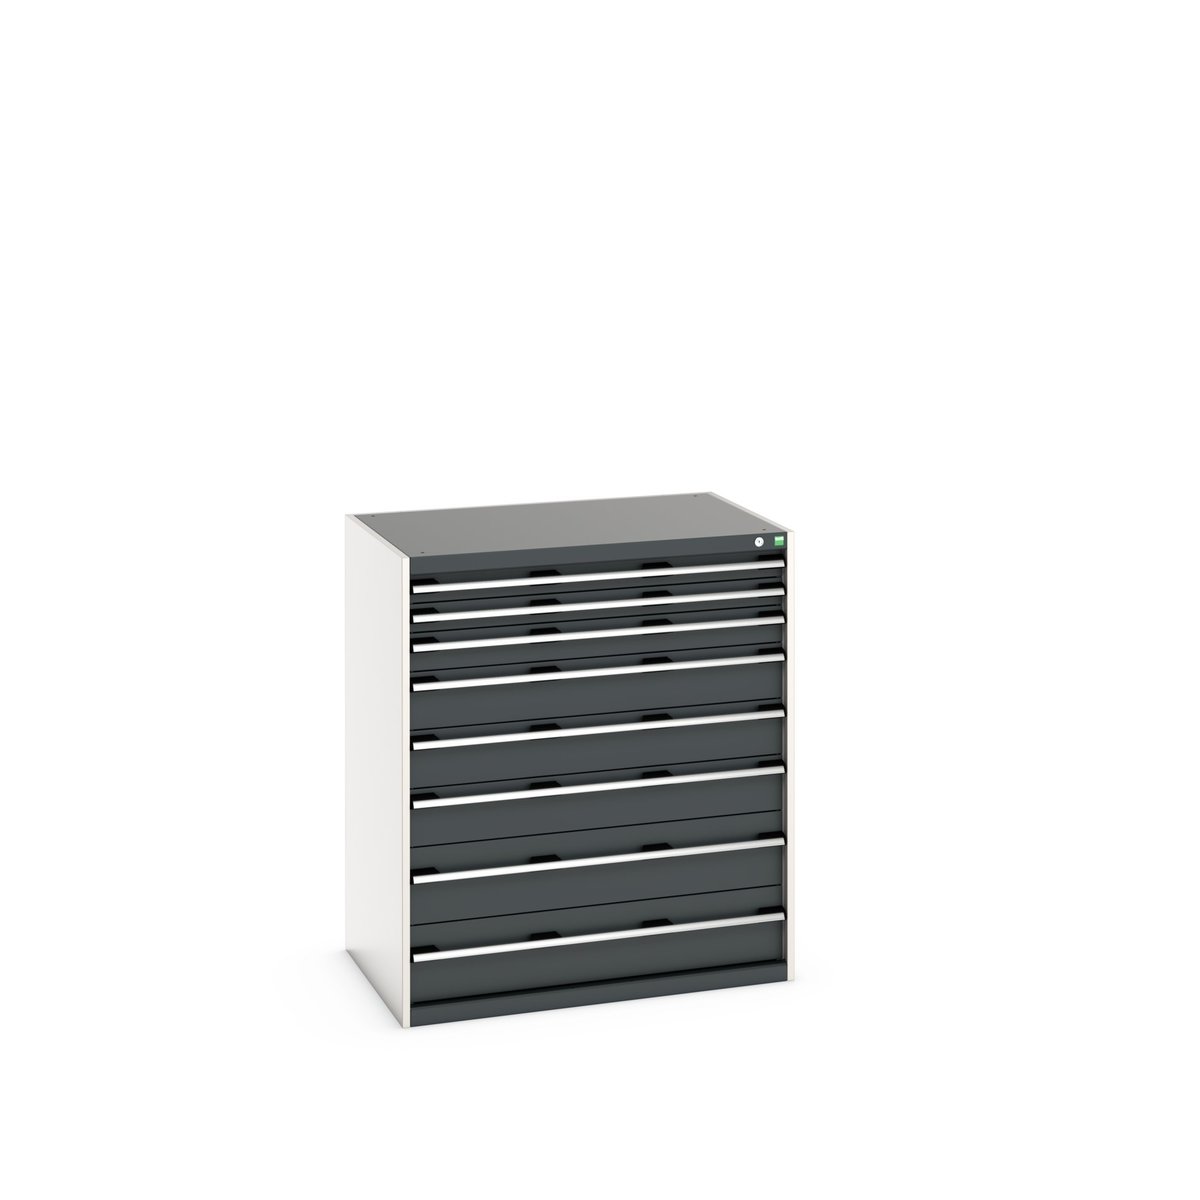 40029031. - cubio drawer cabinet